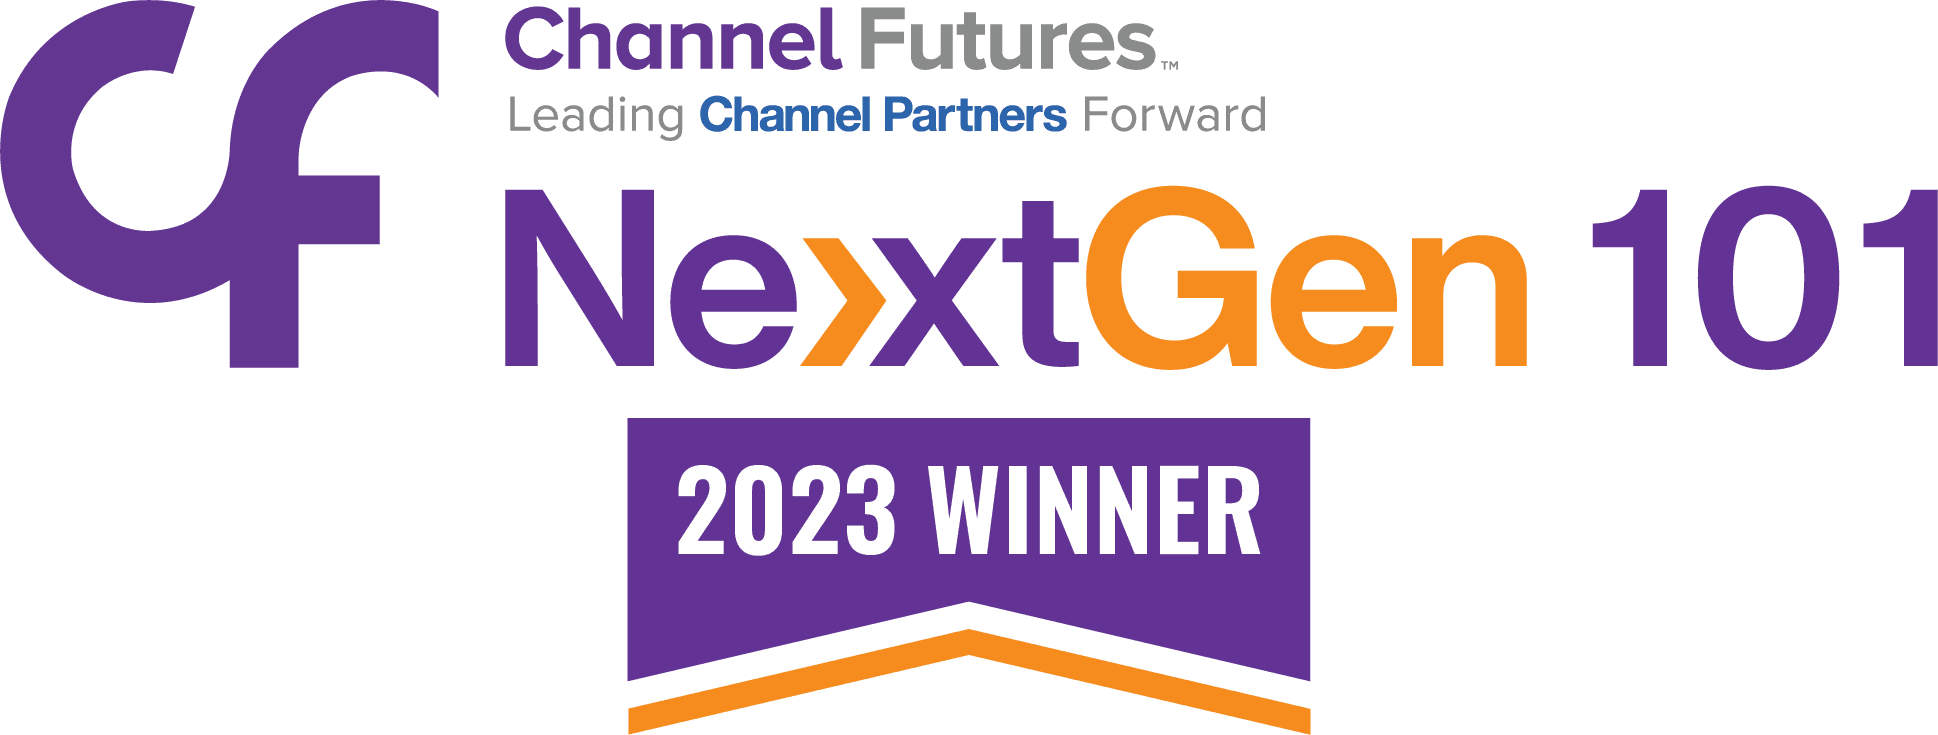 Channel Futures NextGen 2023 Winner for business that provides CISO risk management.